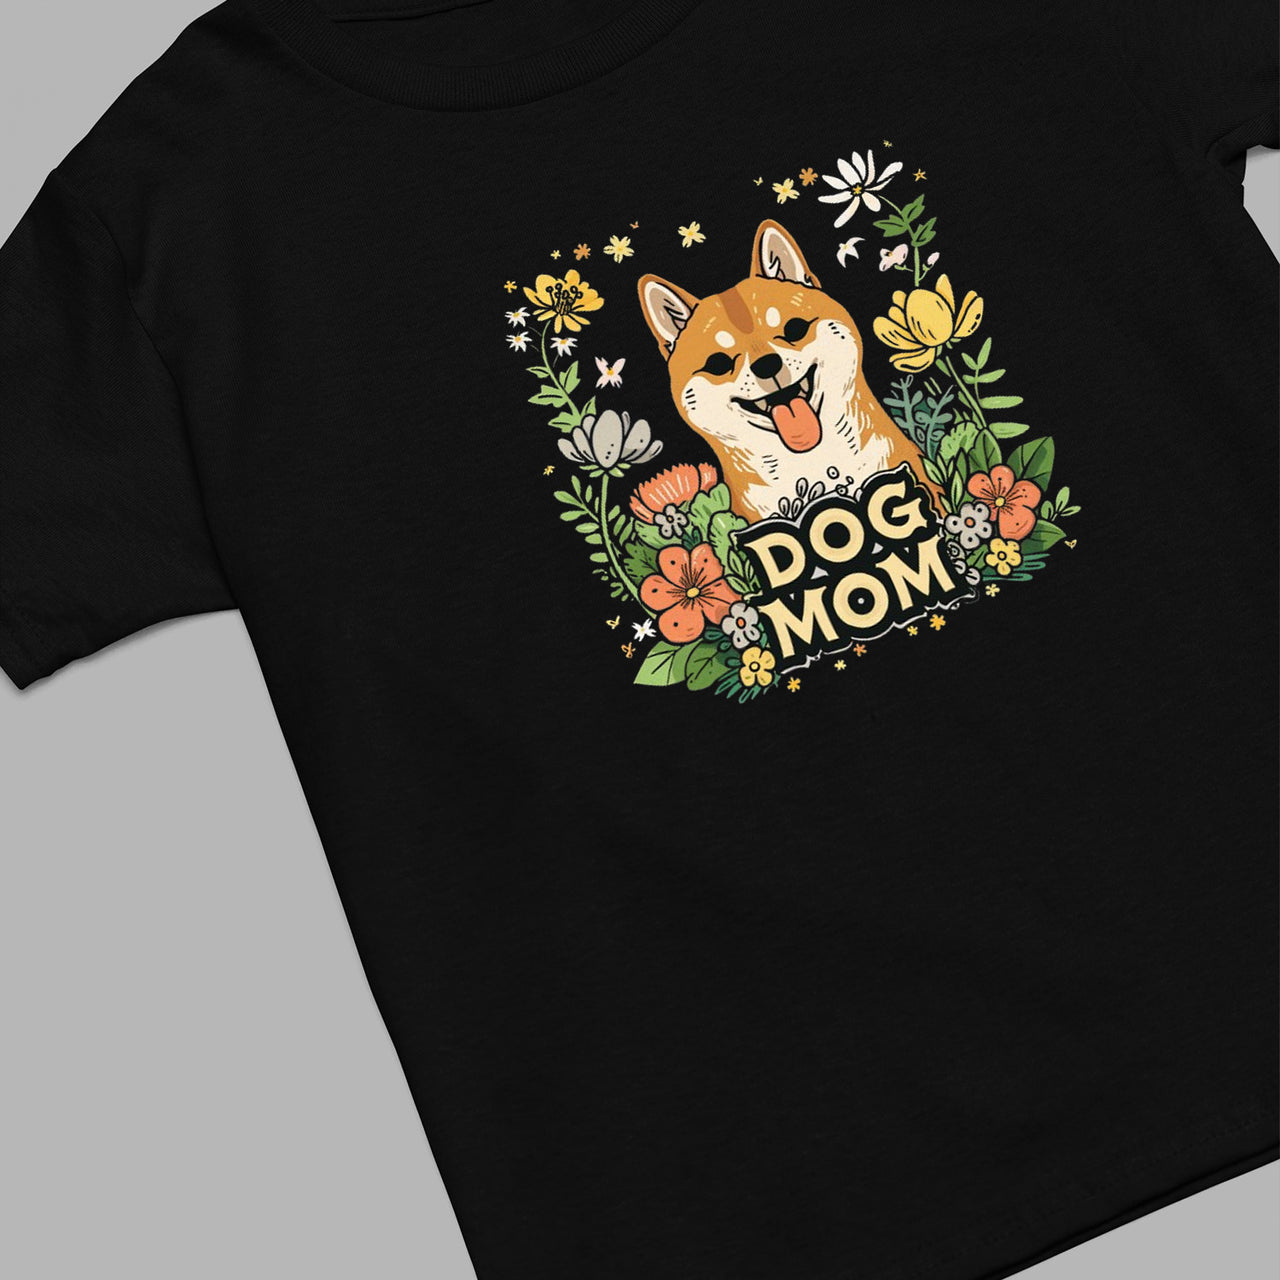 Shiba Dog T-shirt, Pet Lover Shirt, Dog Lover Shirt, Dog Mom T-Shirt, Dog Owner Shirt, Gift For Dog Mom, Funny Dog Shirts, Women Dog T-Shirt, Mother's Day Gift, Dog Lover Wife Gifts, Dog Shirt